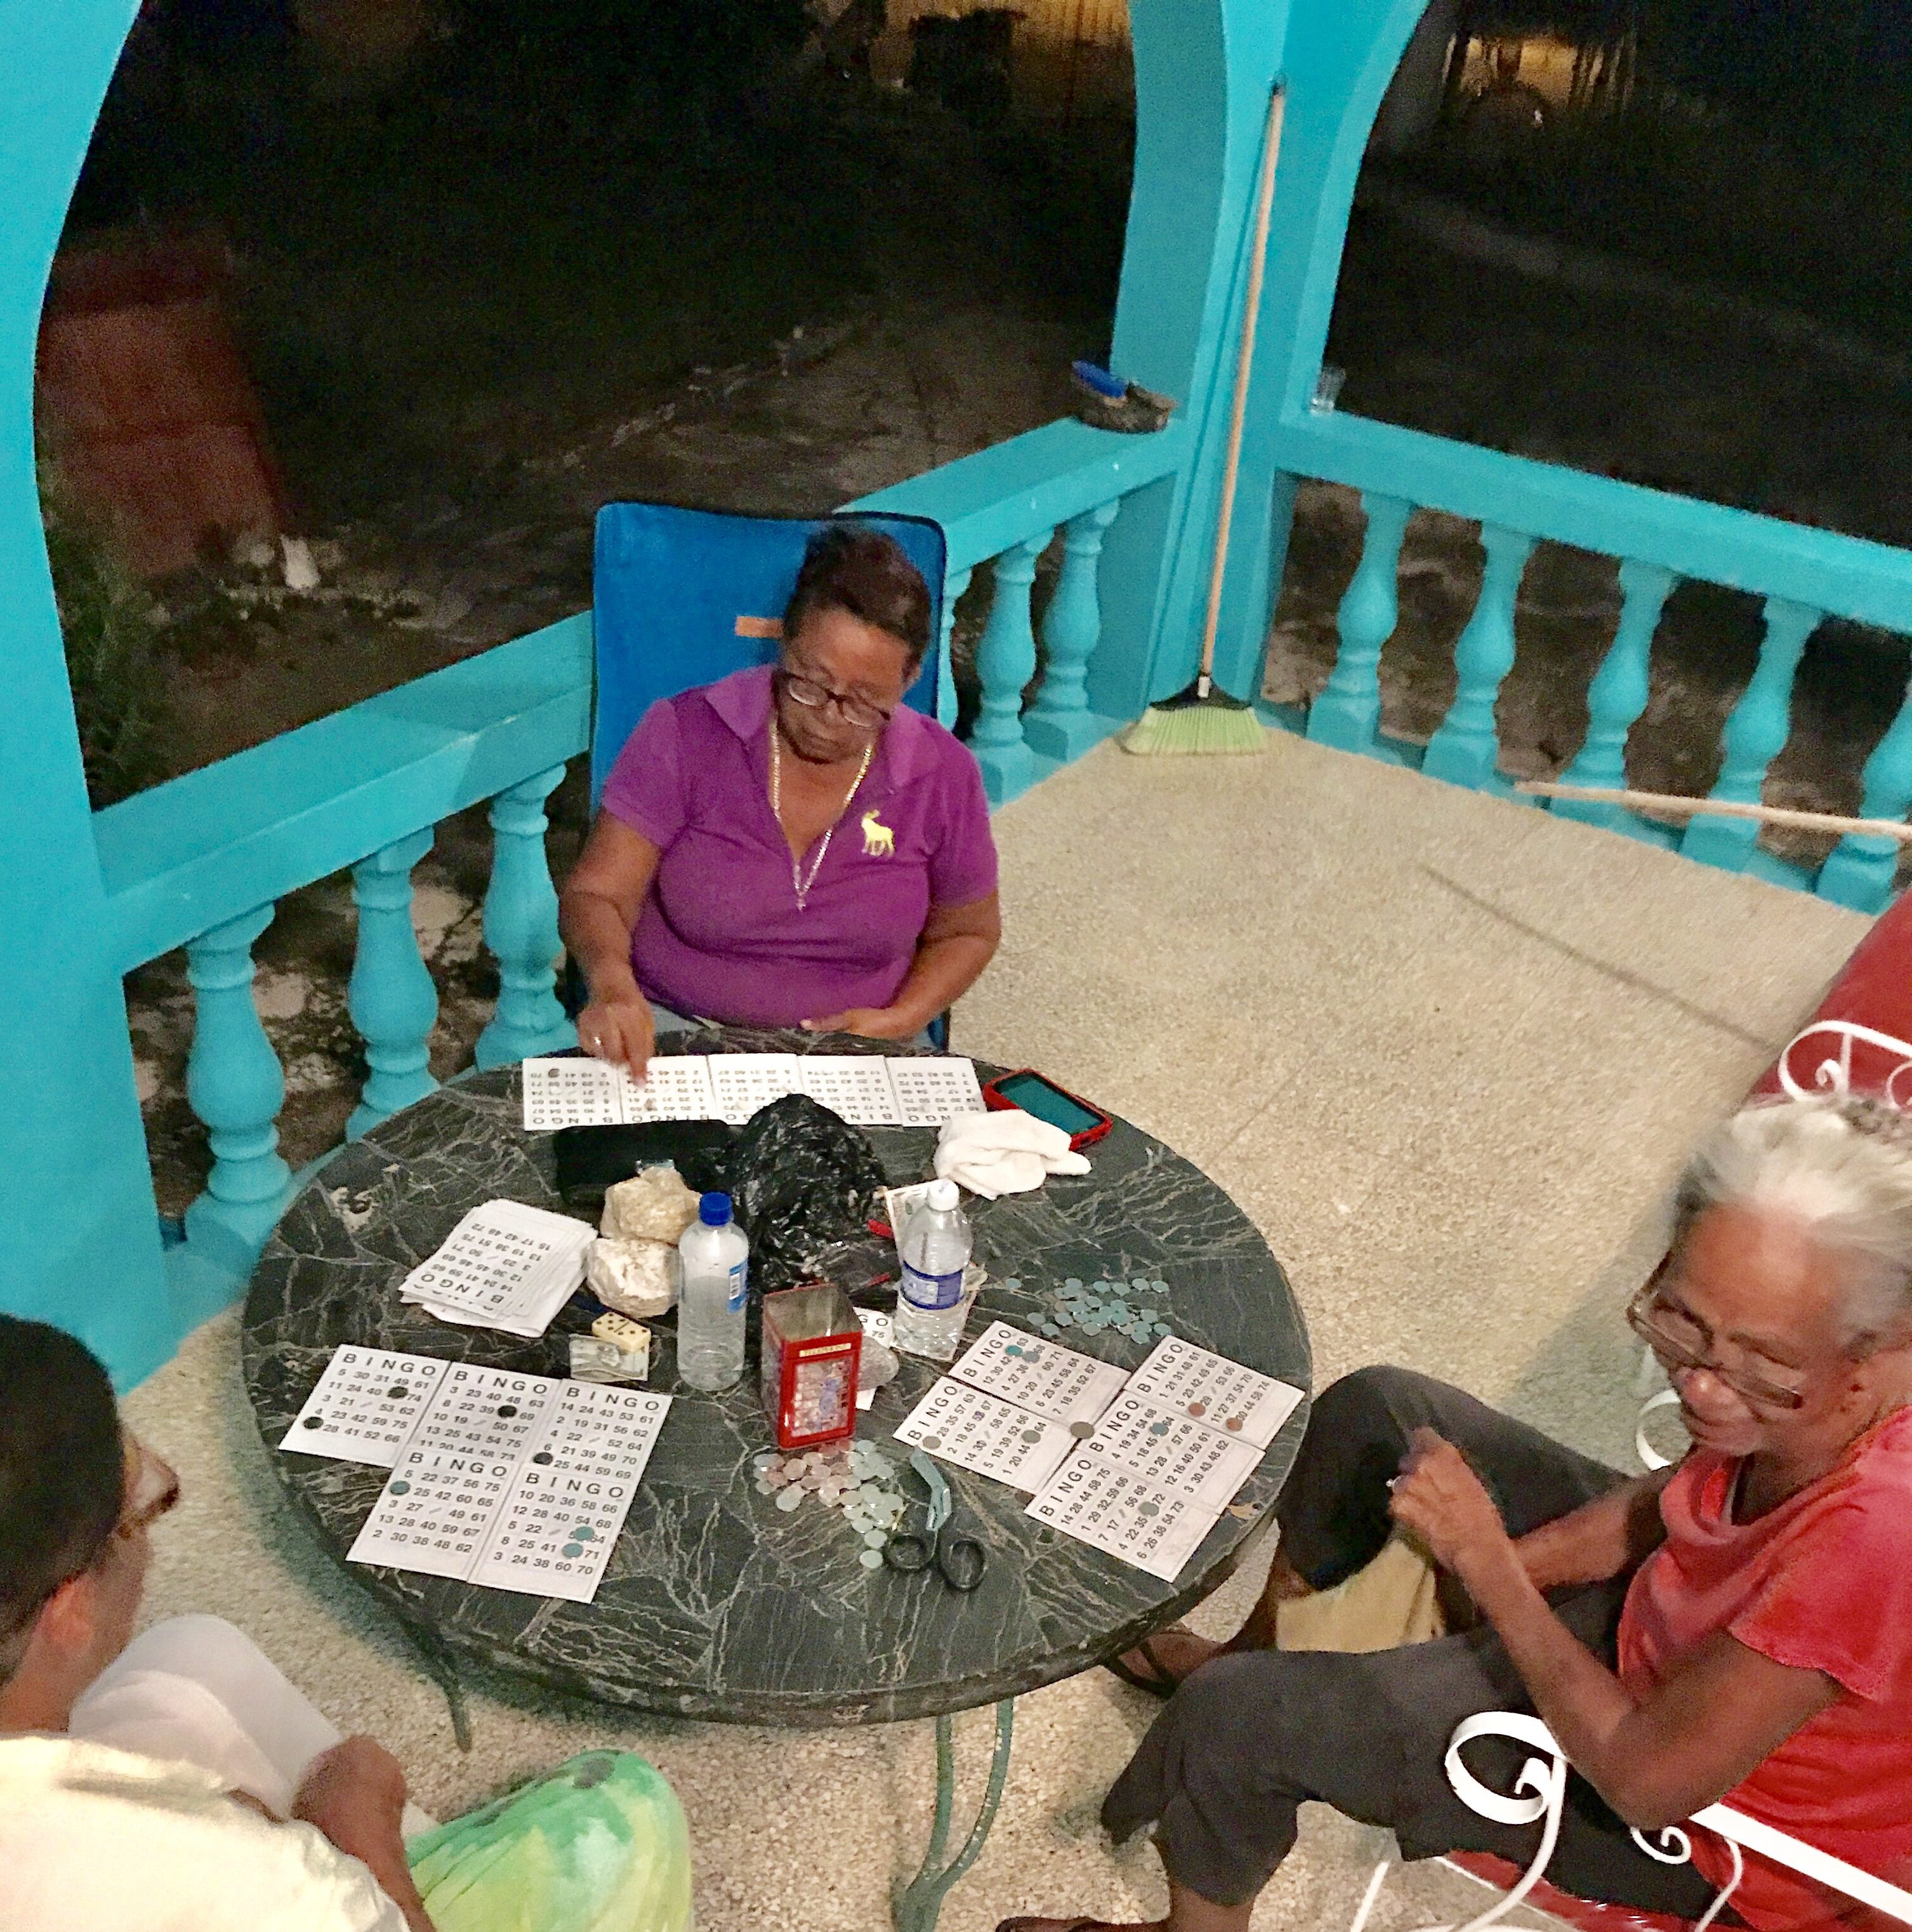 Life on the verandah in Jamaica